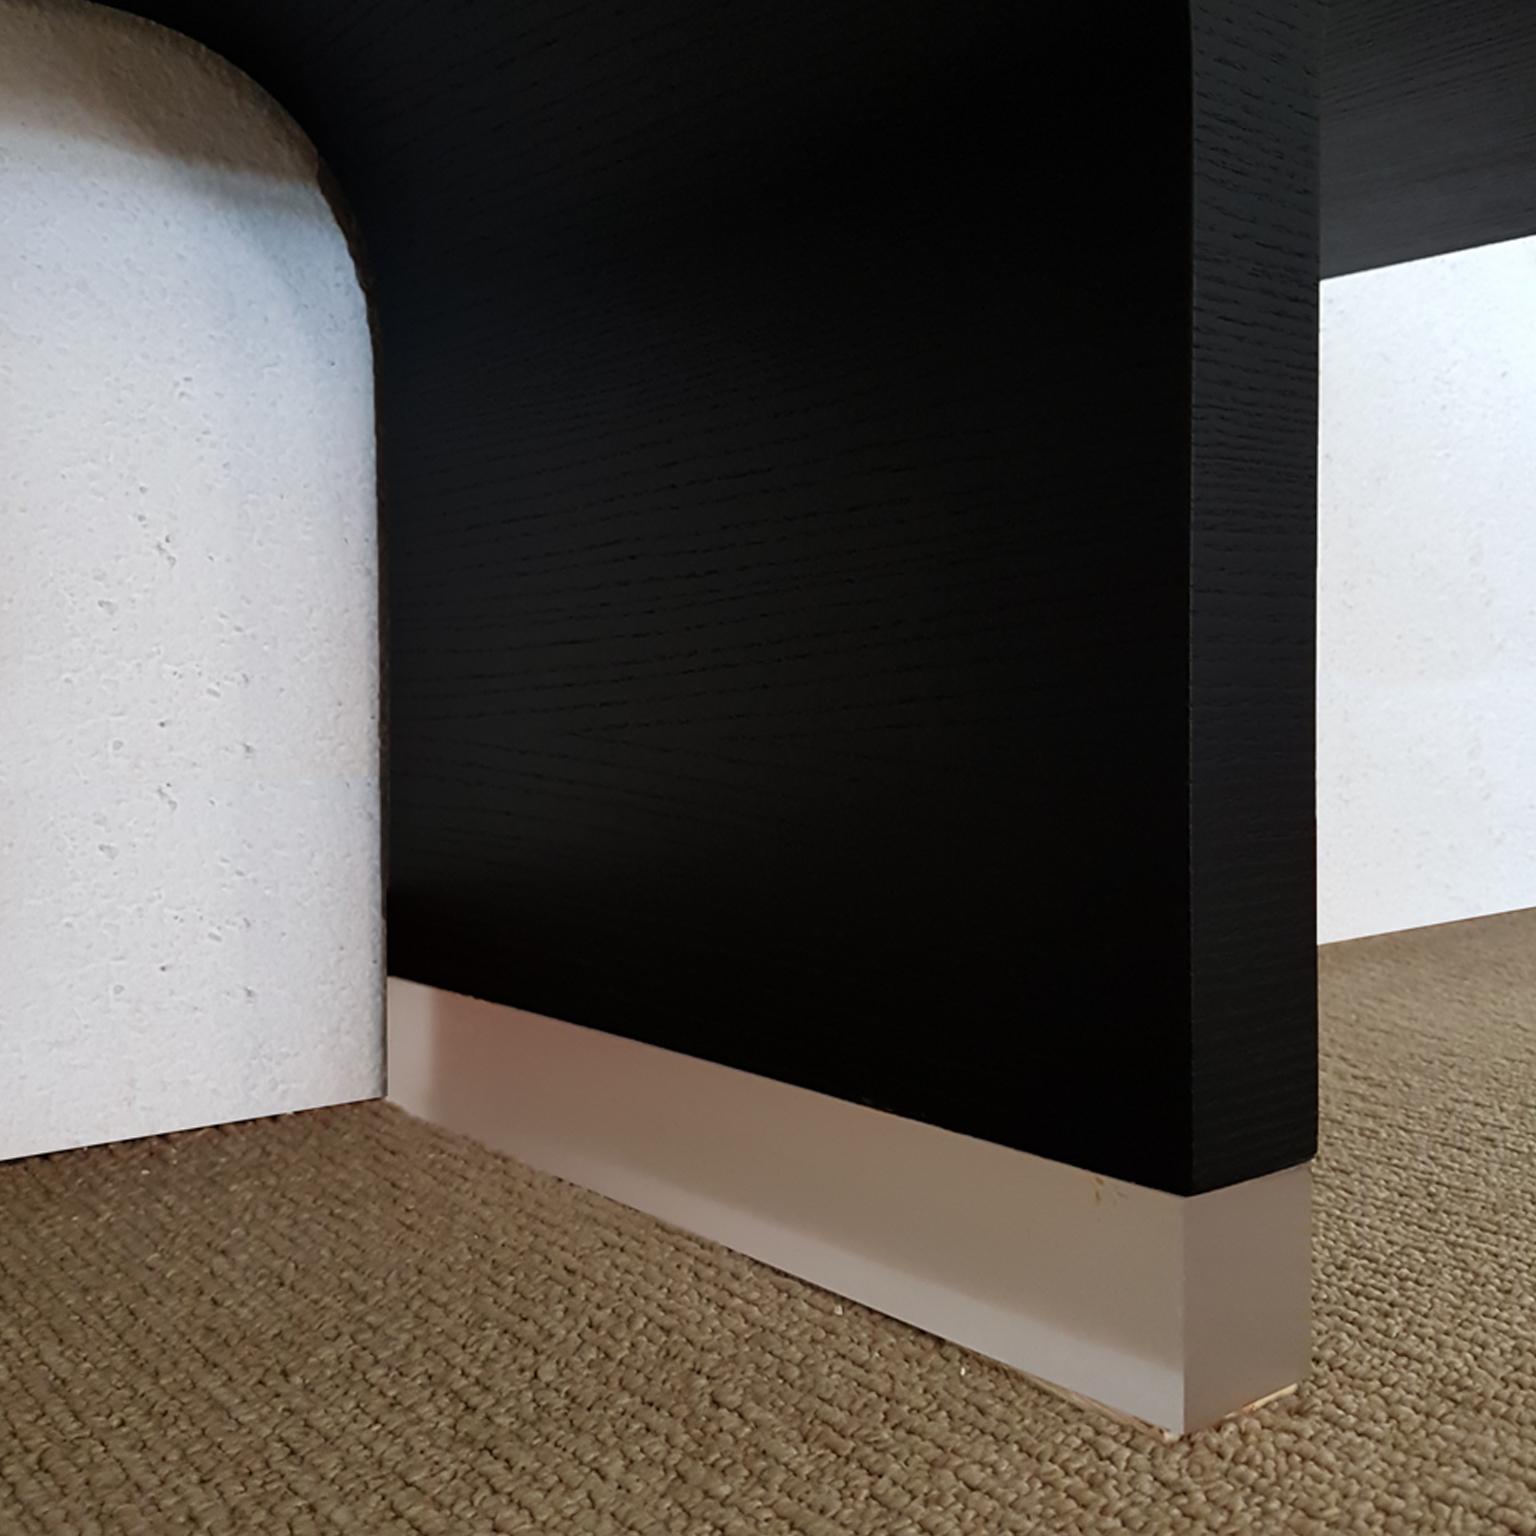 Plexiglass Bernini Italian Light and Dark Curved Ash Wood Bookcase, 2002, by Franco Poli For Sale